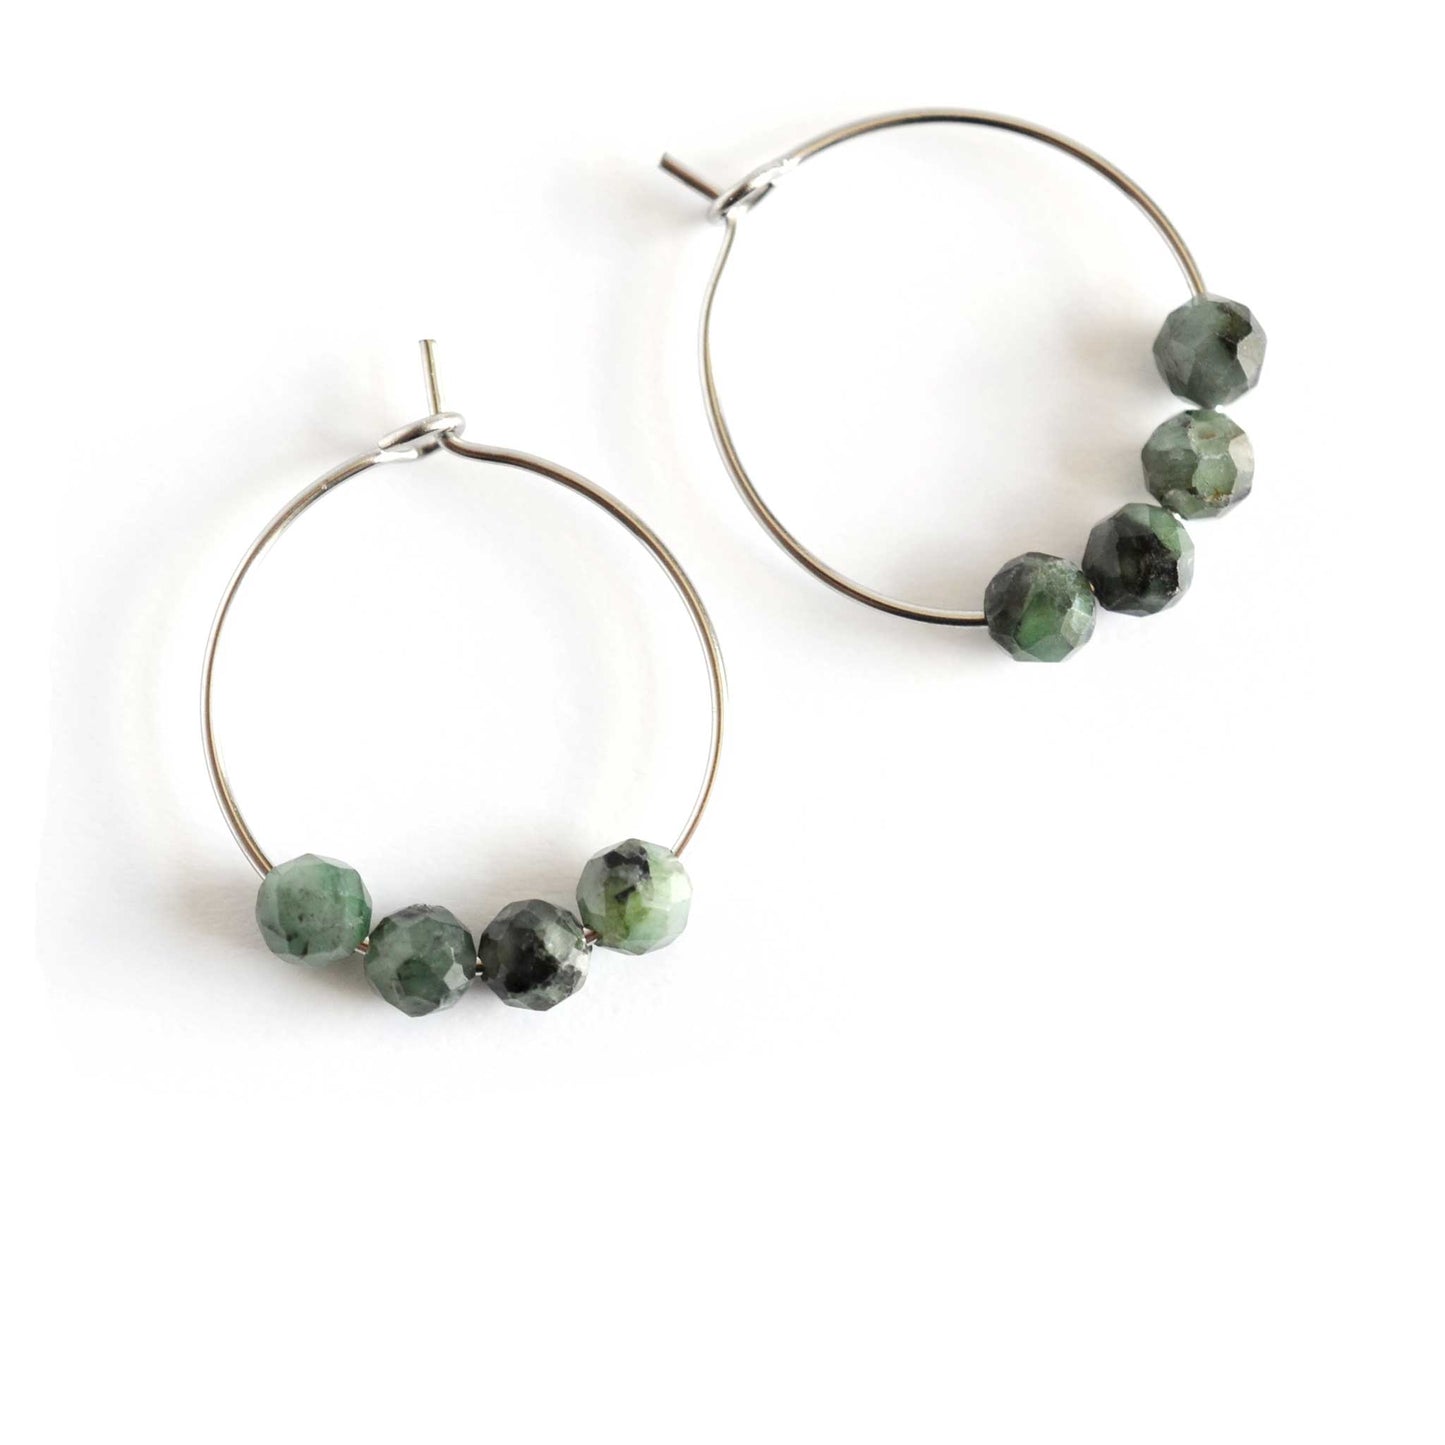 Park of dark green natural Emerald hoop earrings on white background